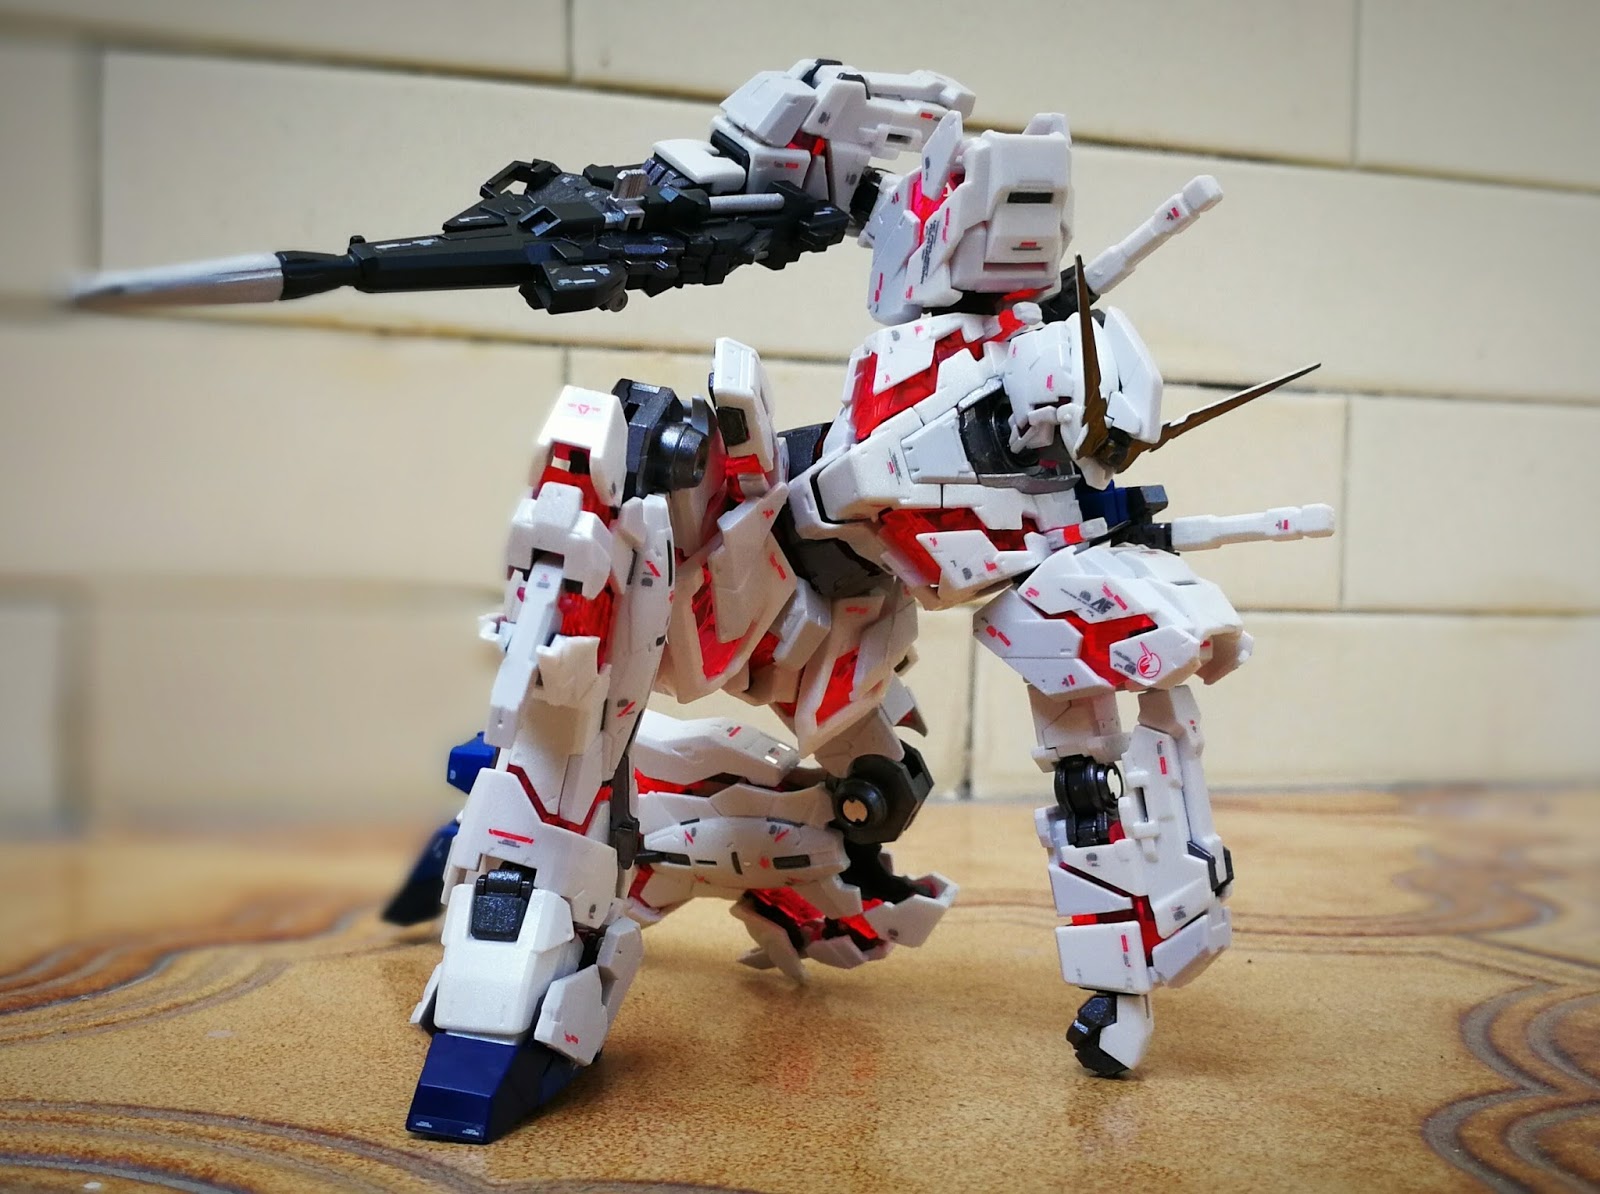 Bandai Hobby RG 1/144 Unicorn Gundam Figure for sale online 